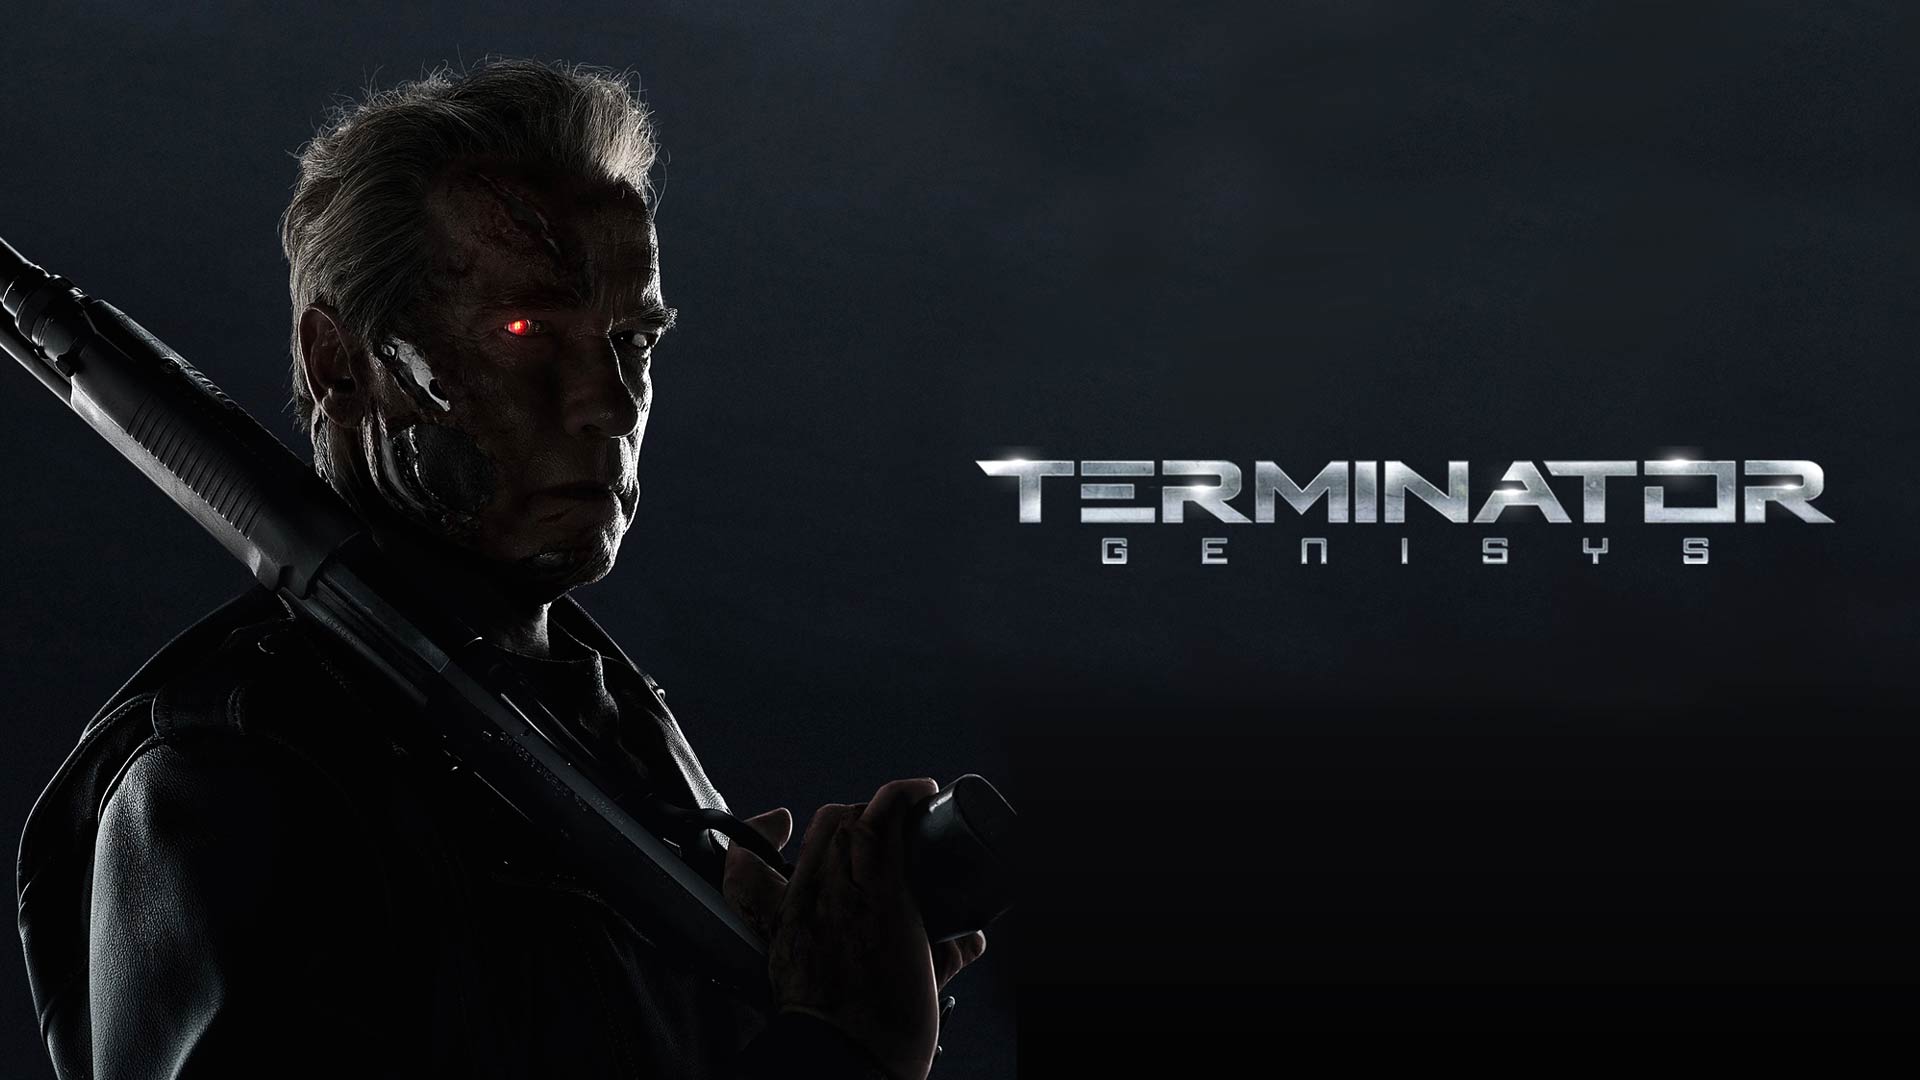 Terminator 5 Genisys 2015 movie wallpapers – Free full hd ...